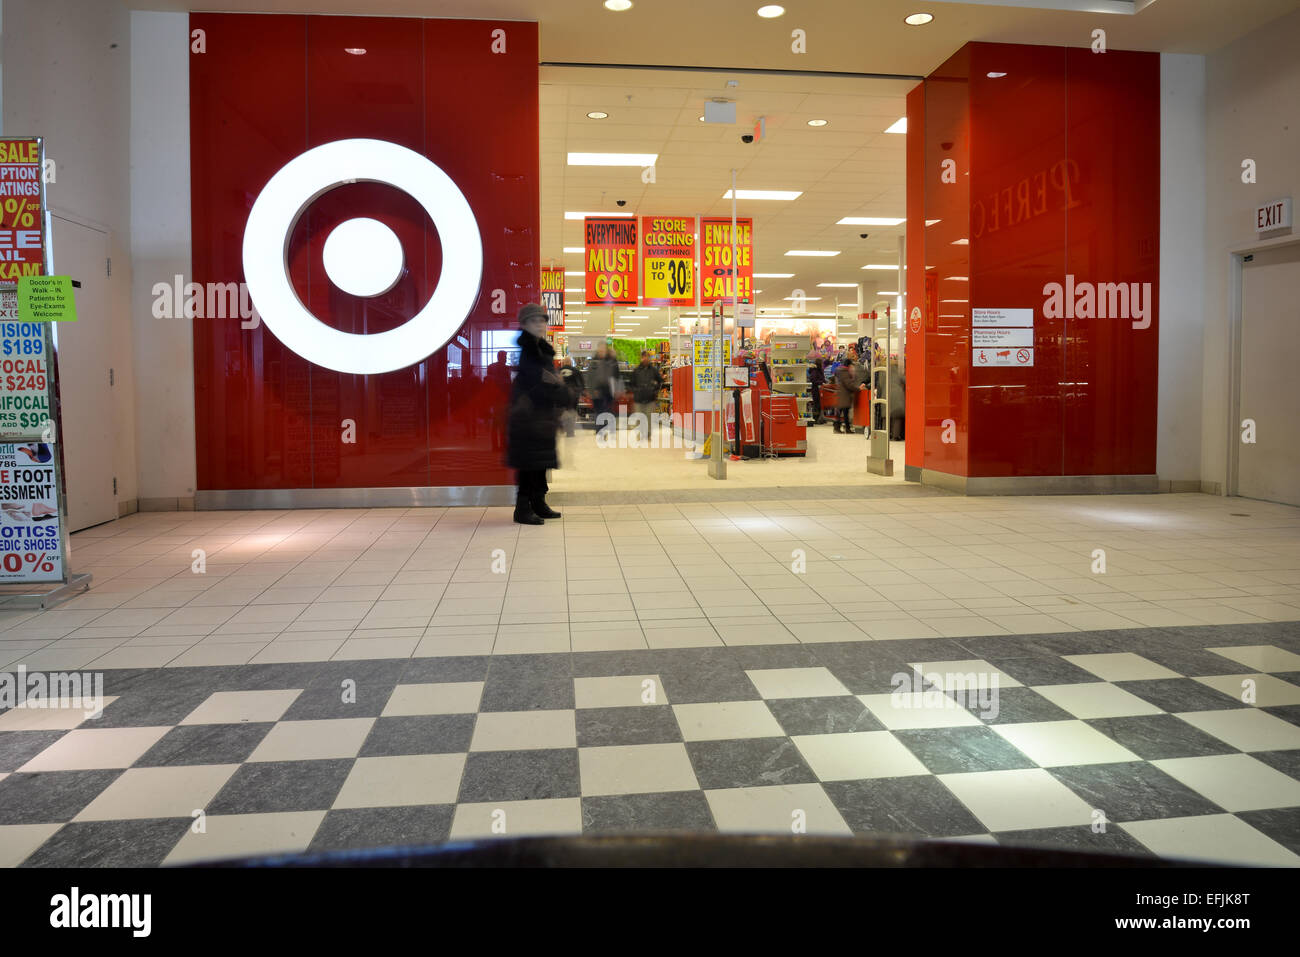 Toronto, Ontario, Canada. 5th February, 2015. Target Canada liquidation sales begin Thursday. Credit:  Nisarg Lakhmani/Alamy Live News Stock Photo